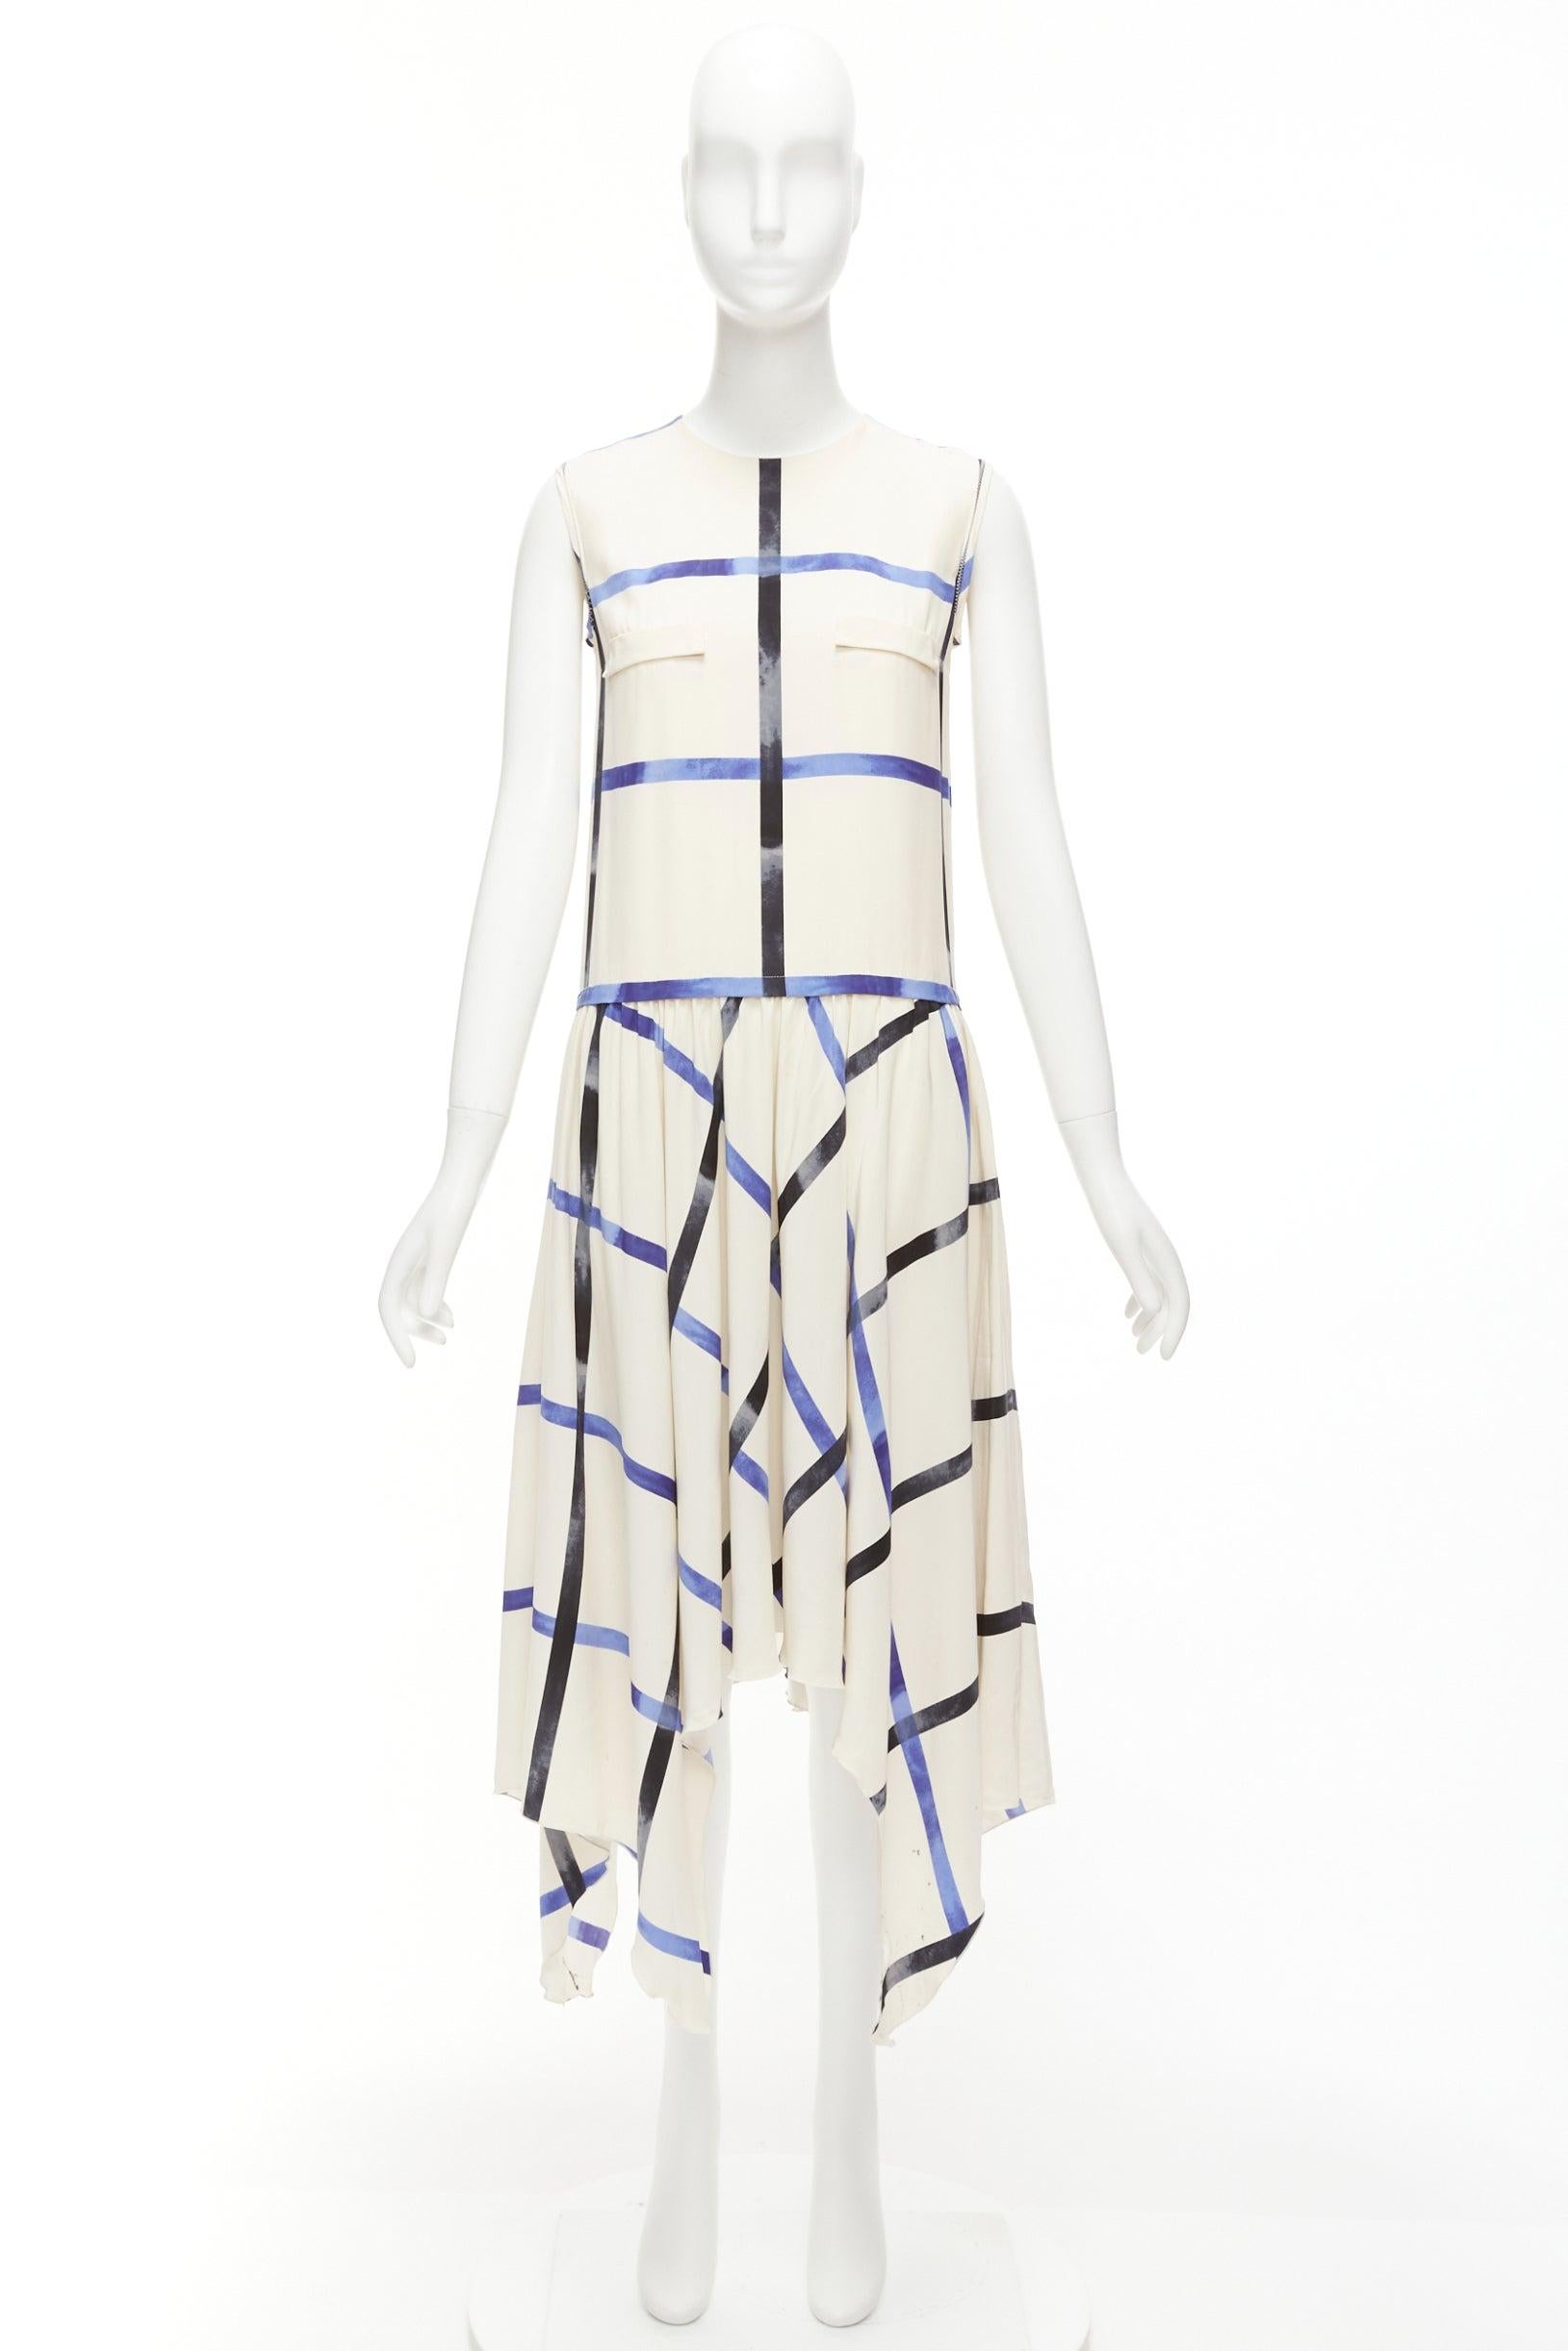 CELINE Phoebe Philo 2014 Runway cream blue 100% silk bias cut dress For Sale 6